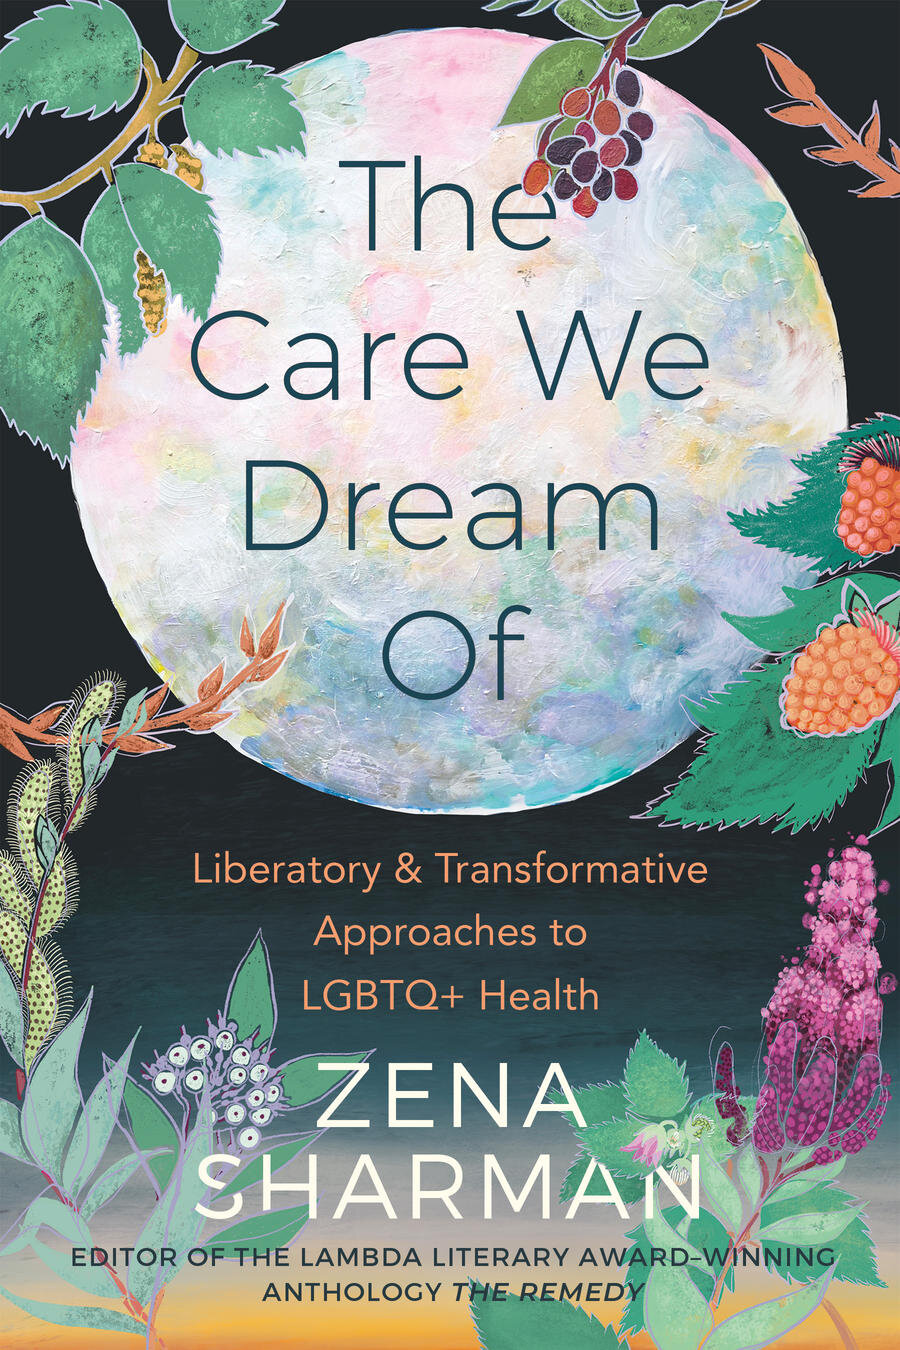  Zena Wynn: books, biography, latest update